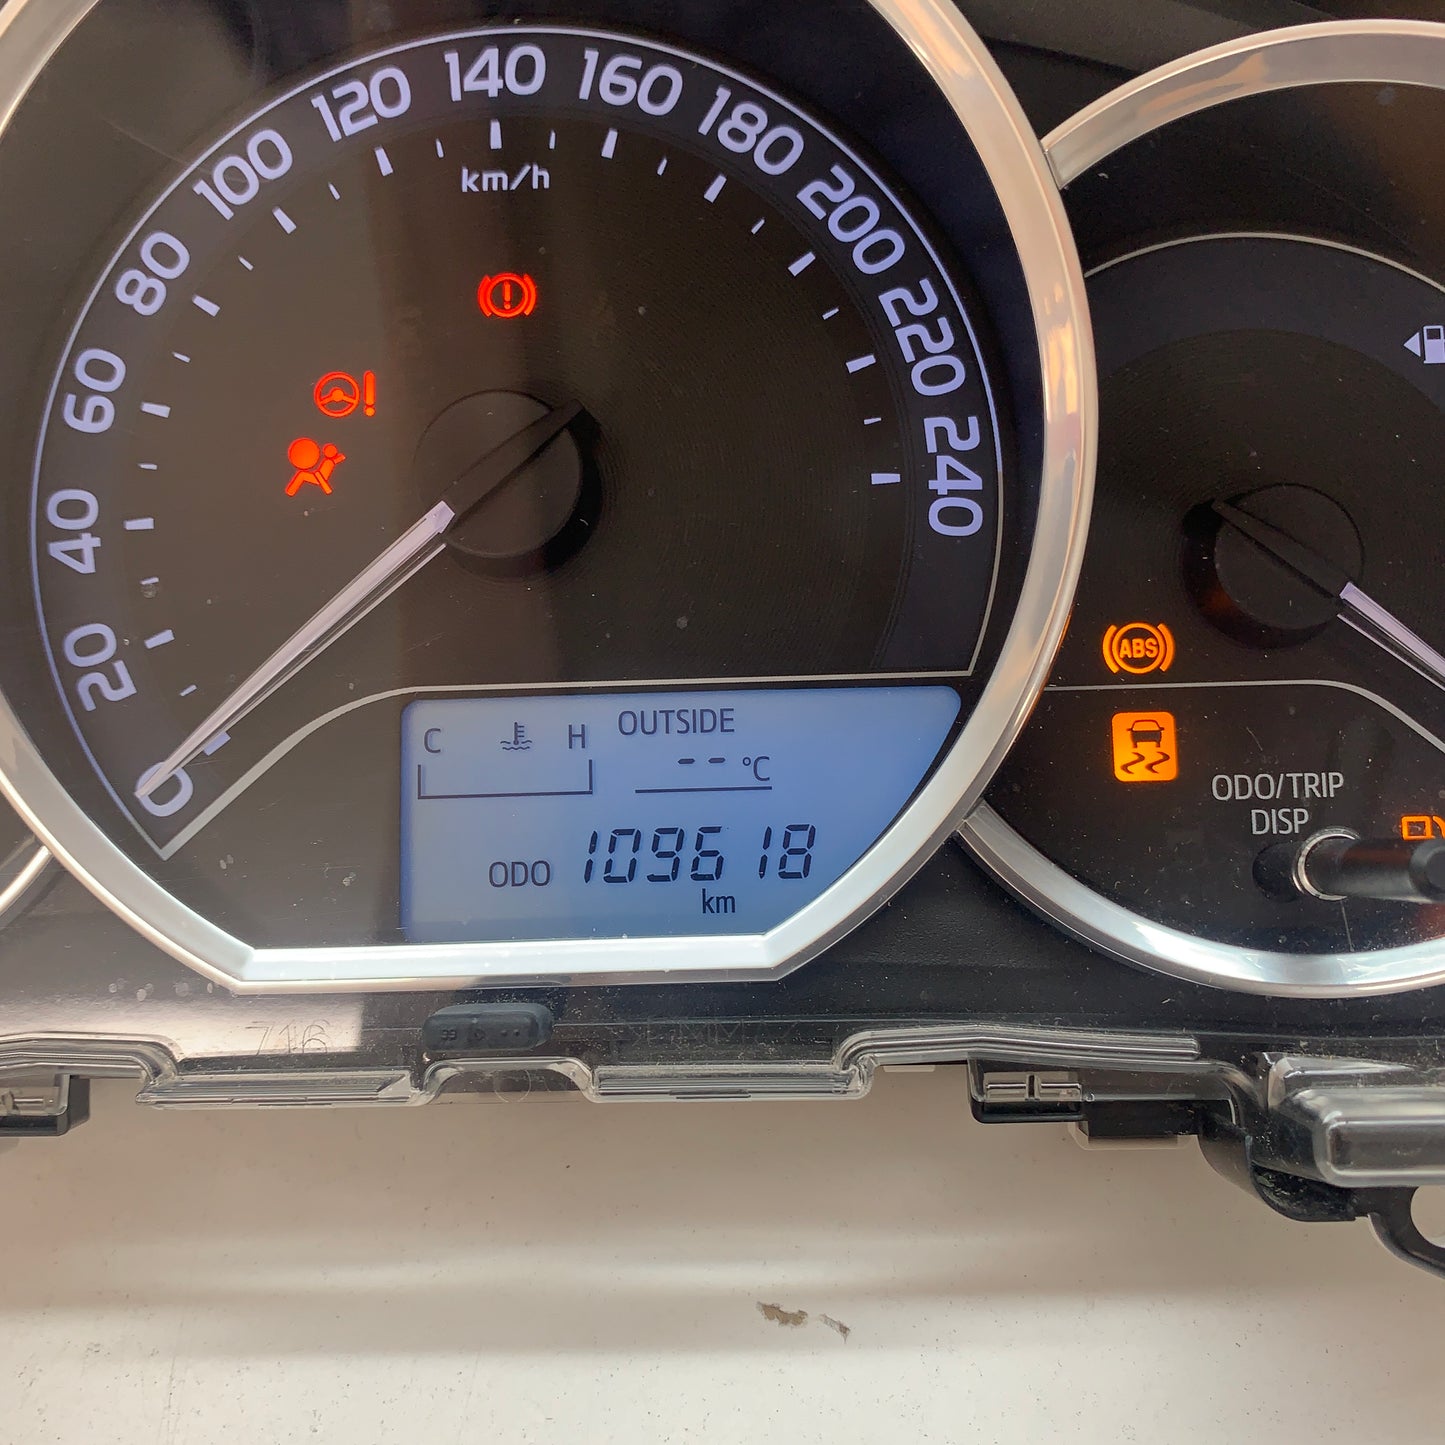 Toyota Corolla Hatchback Instrument Cluster ZRE182R 2015 2016 2017 2018 109618km